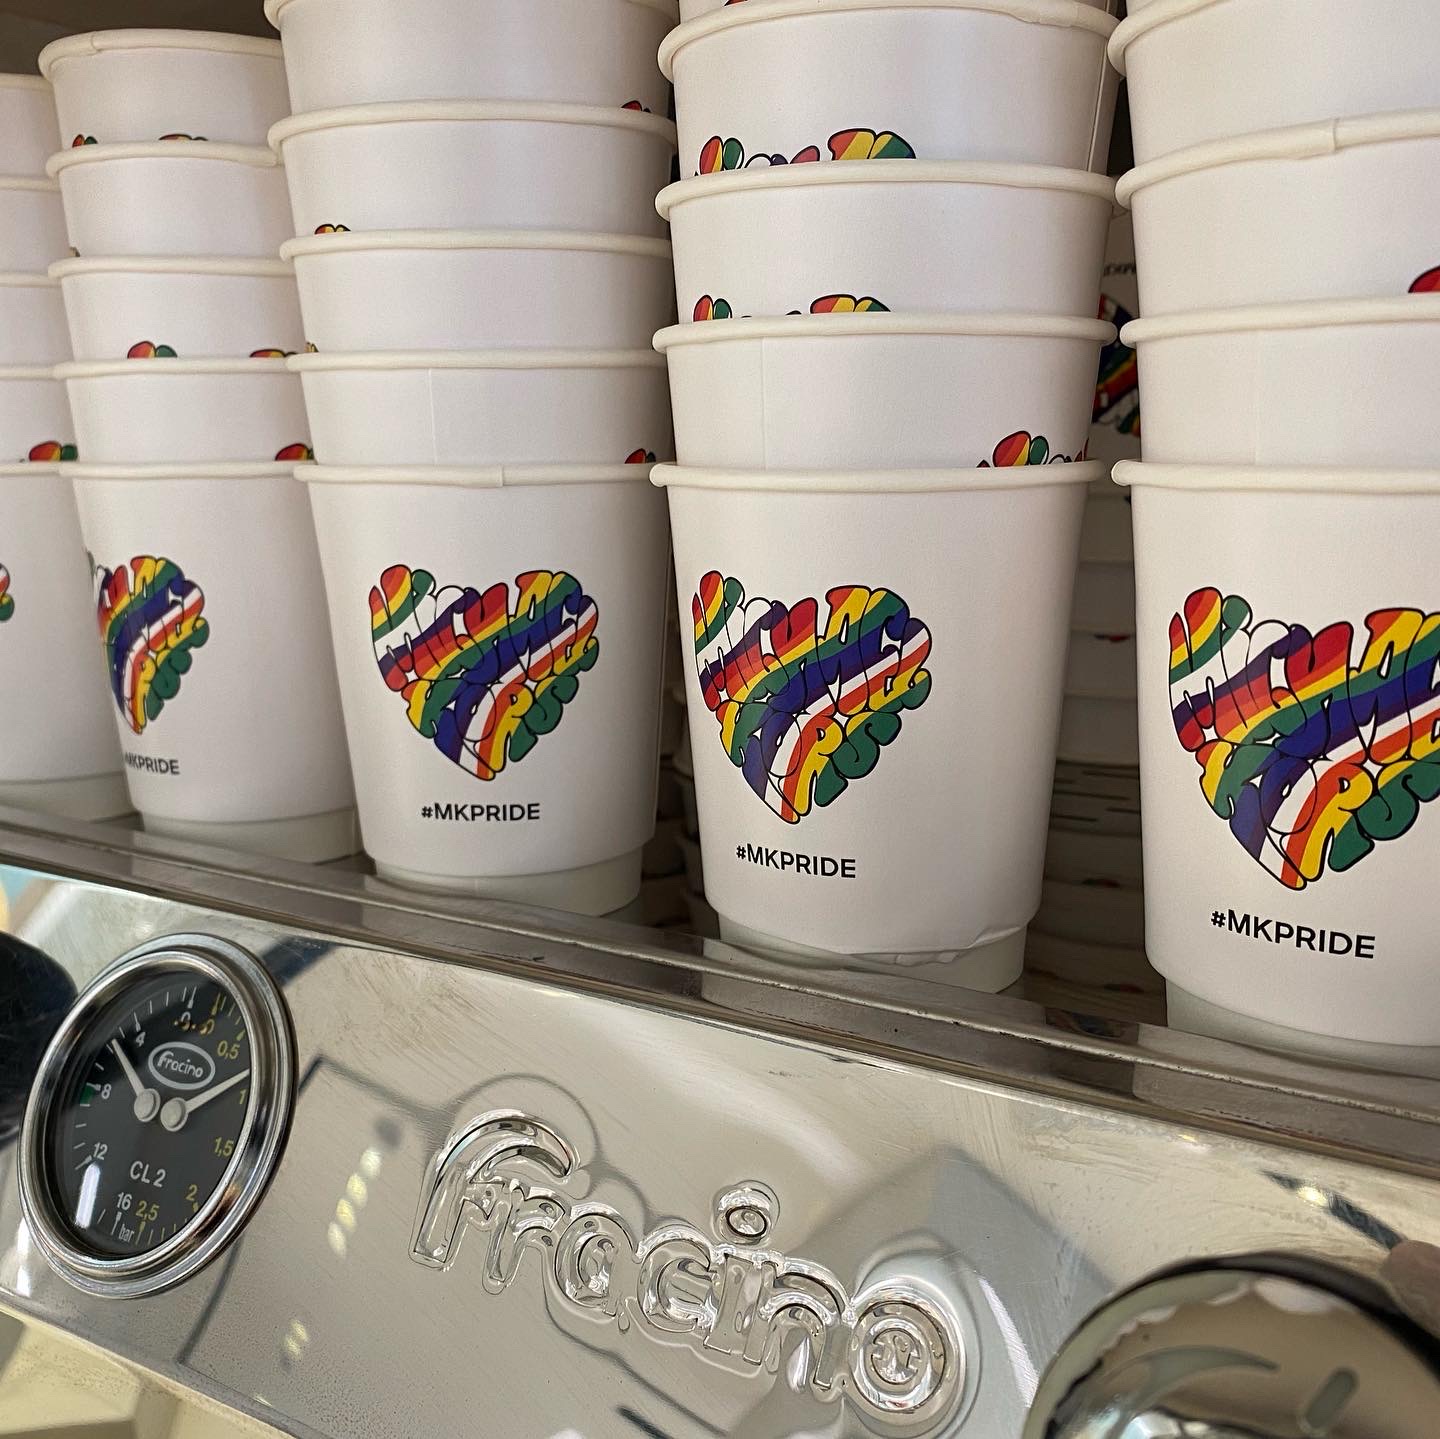 The Mobile Coffee Bean mkpride Michael Kors branded cups